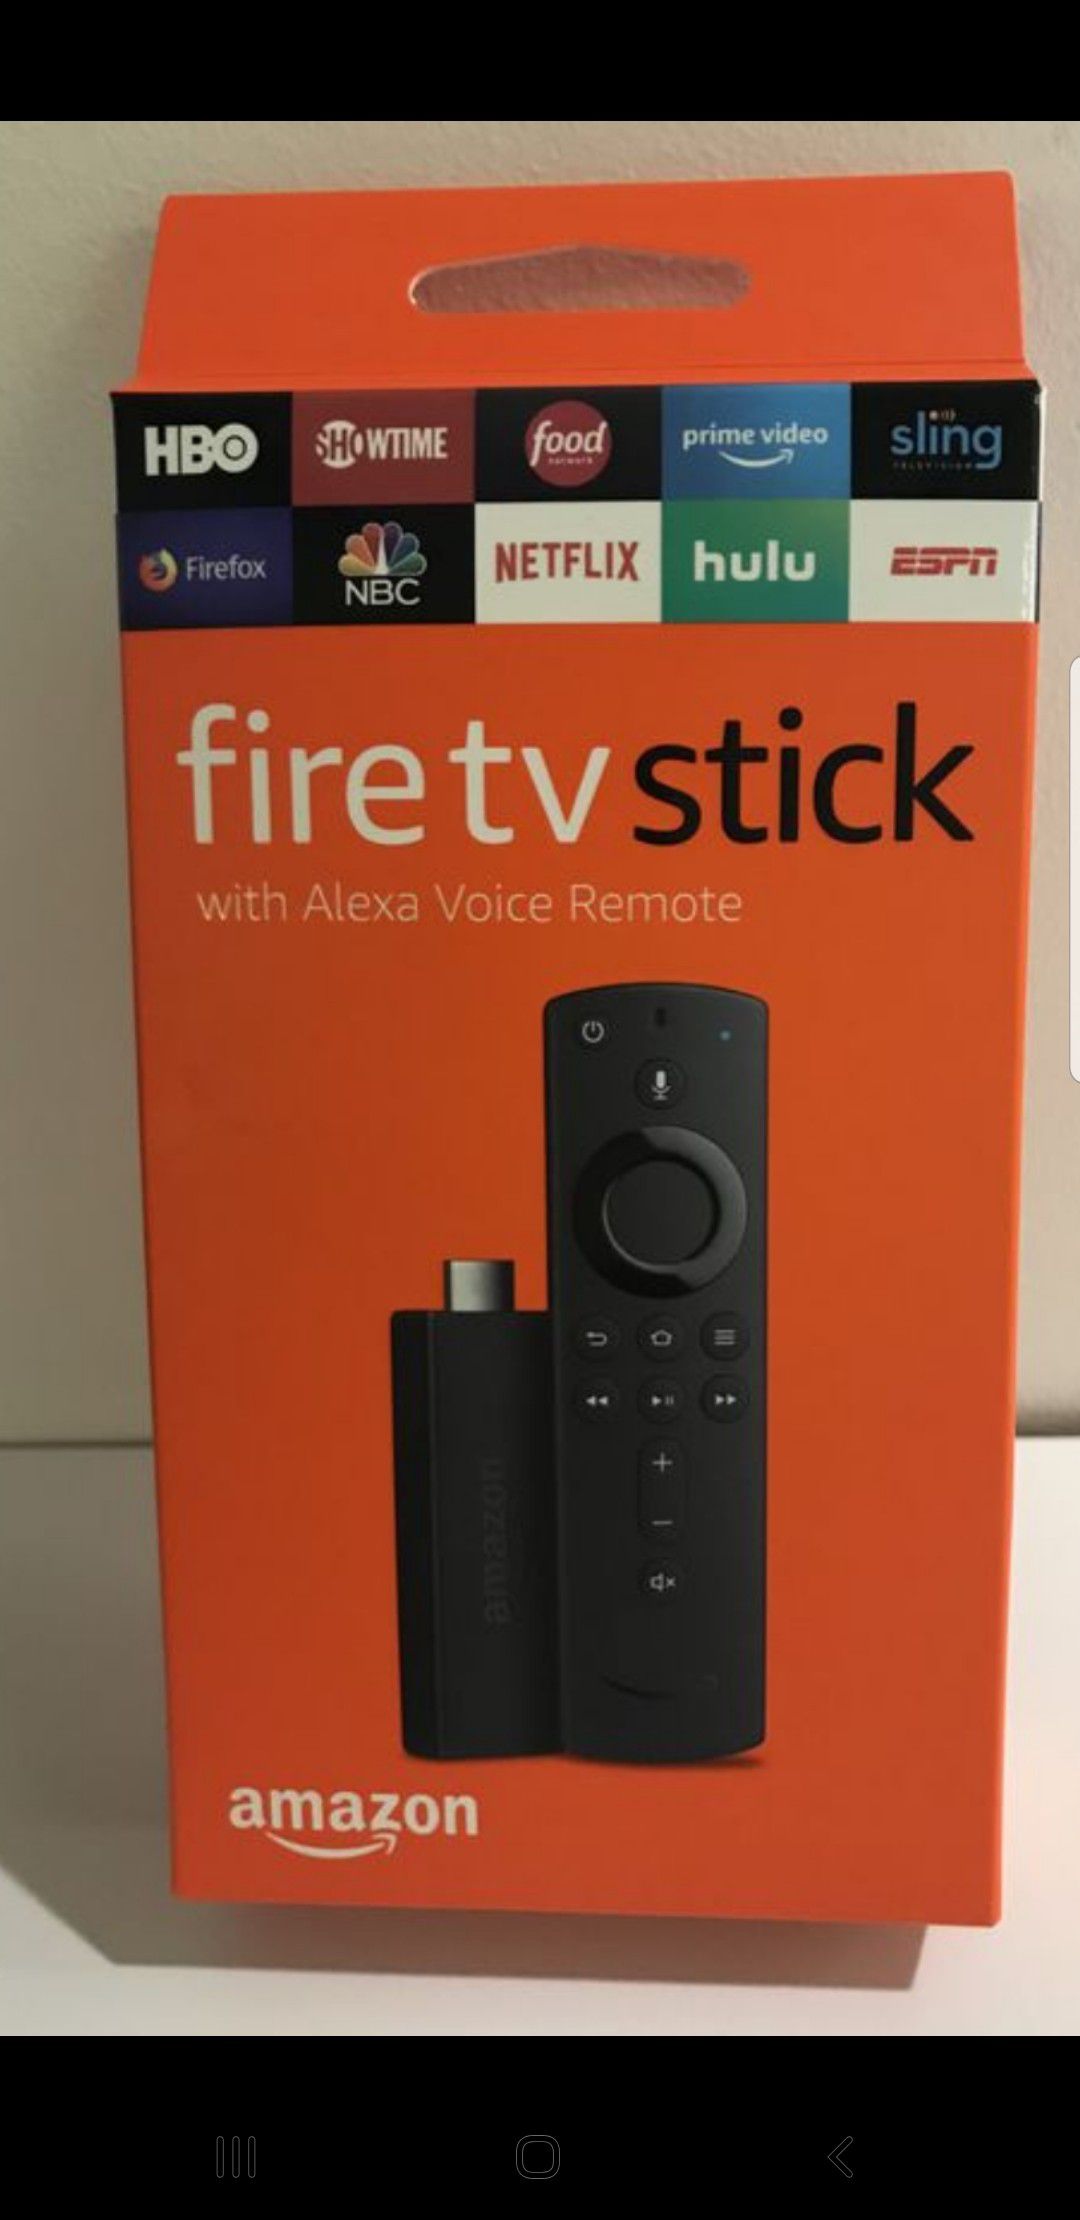 Amazon fire tv stick unlock